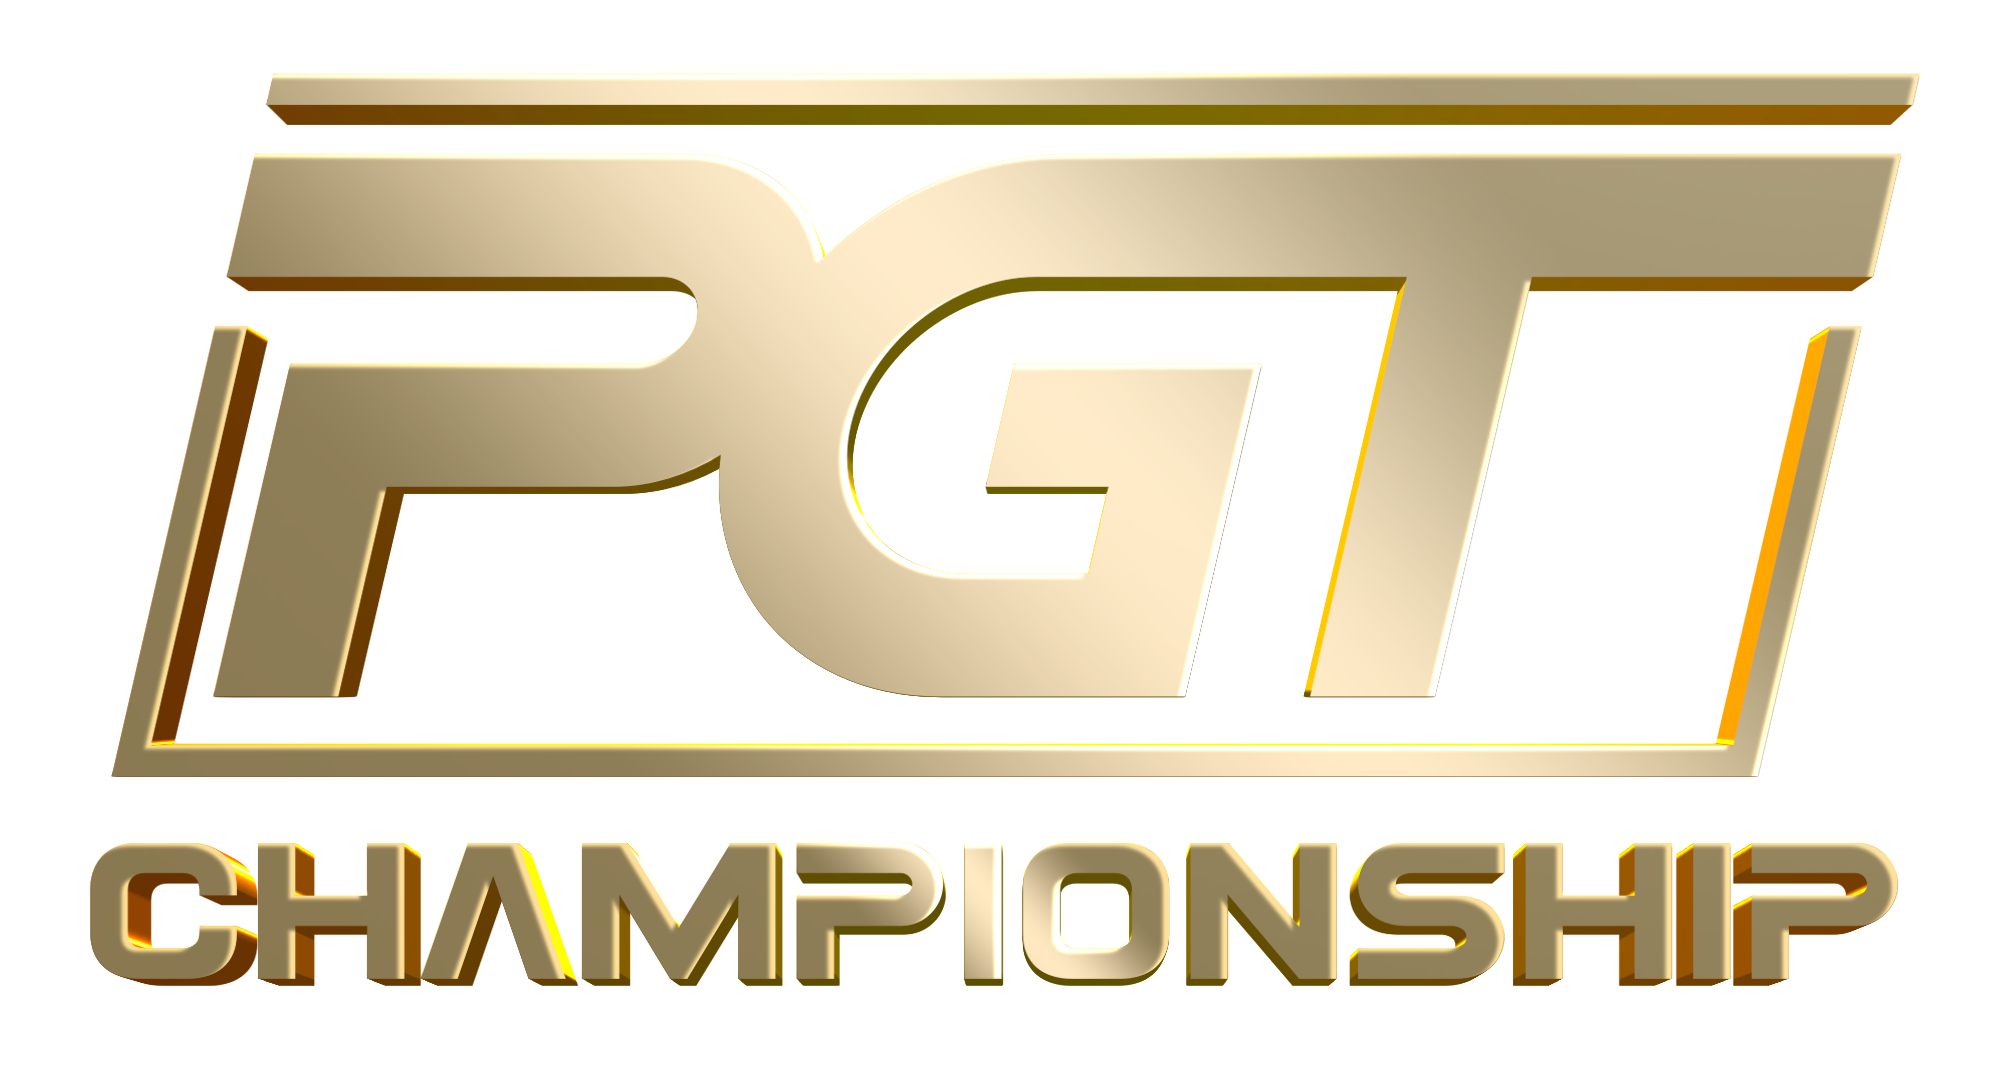 PGT Championship